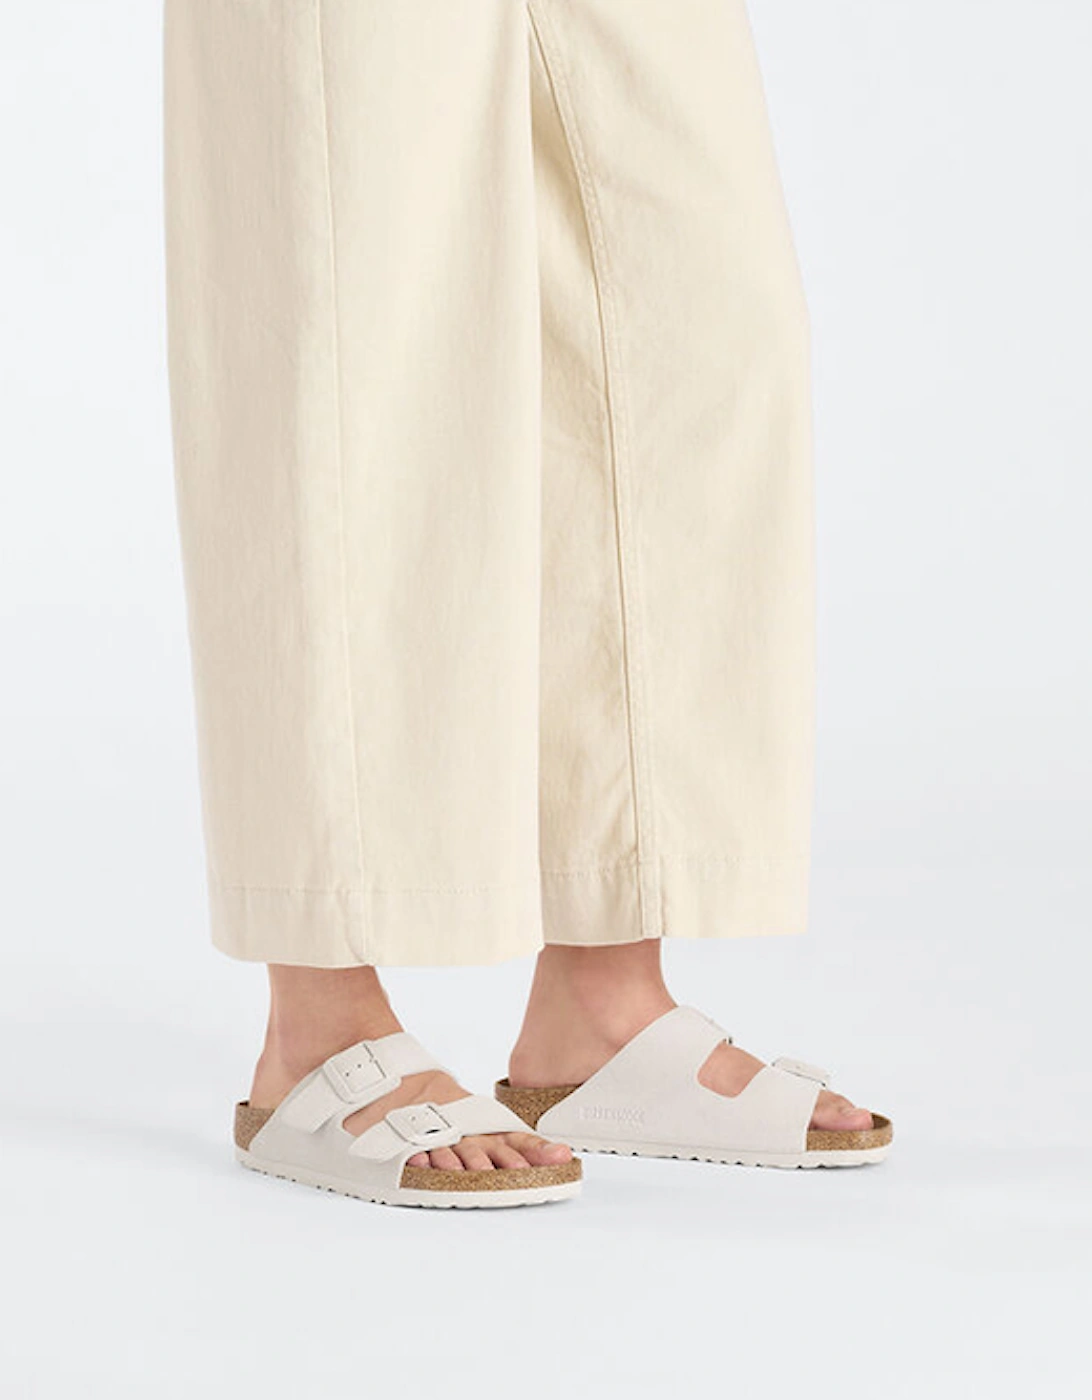 Birkenstock Women's Arizona Suede Leather Sandal Narrow Fit Antique White